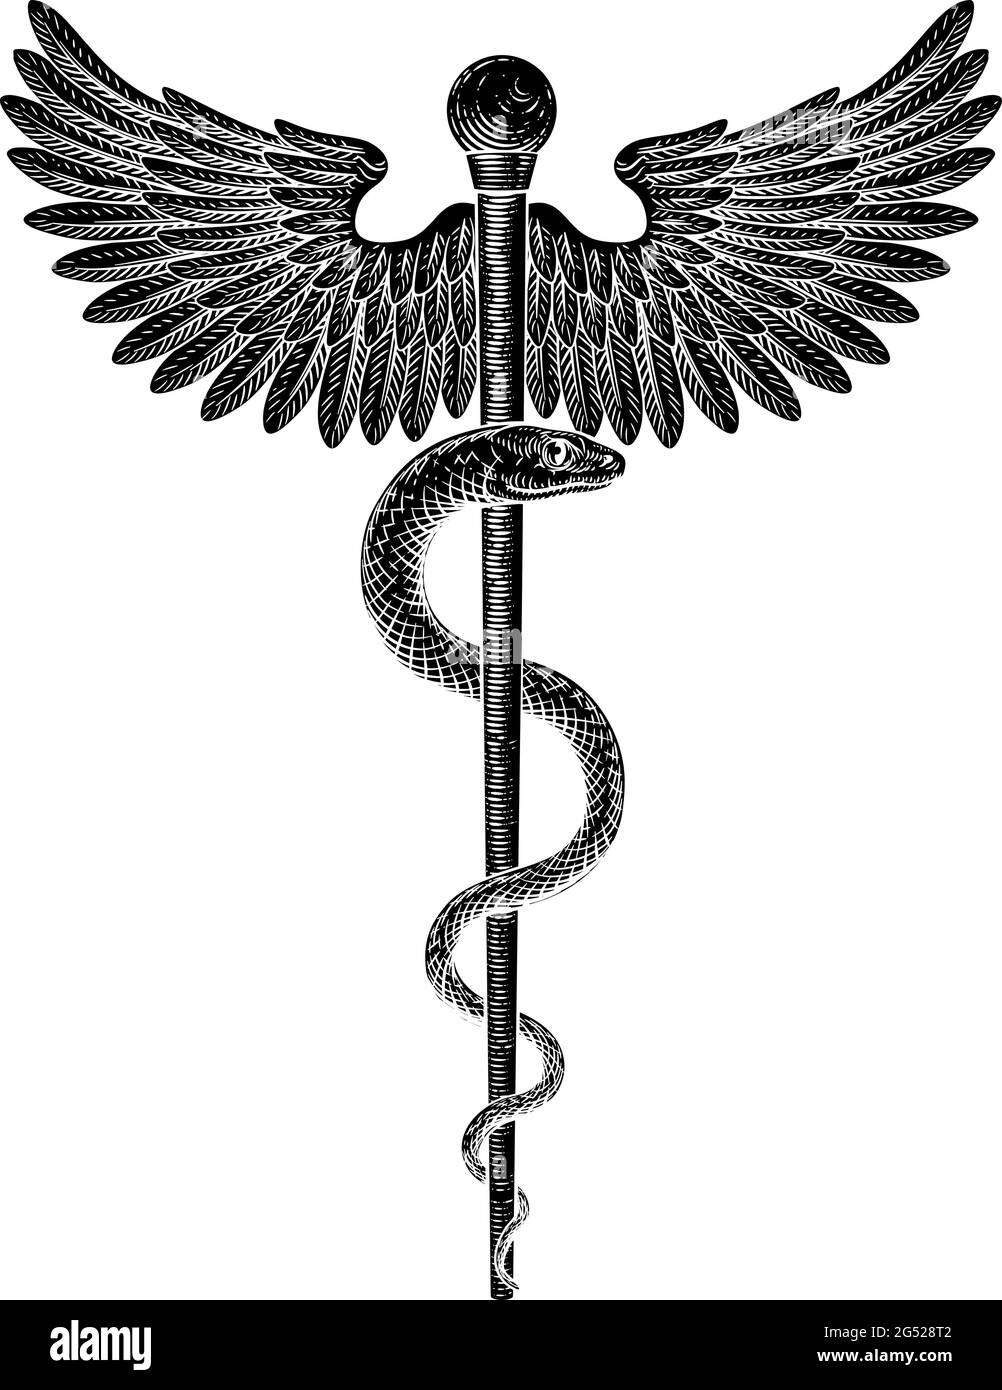 asclepius symbol